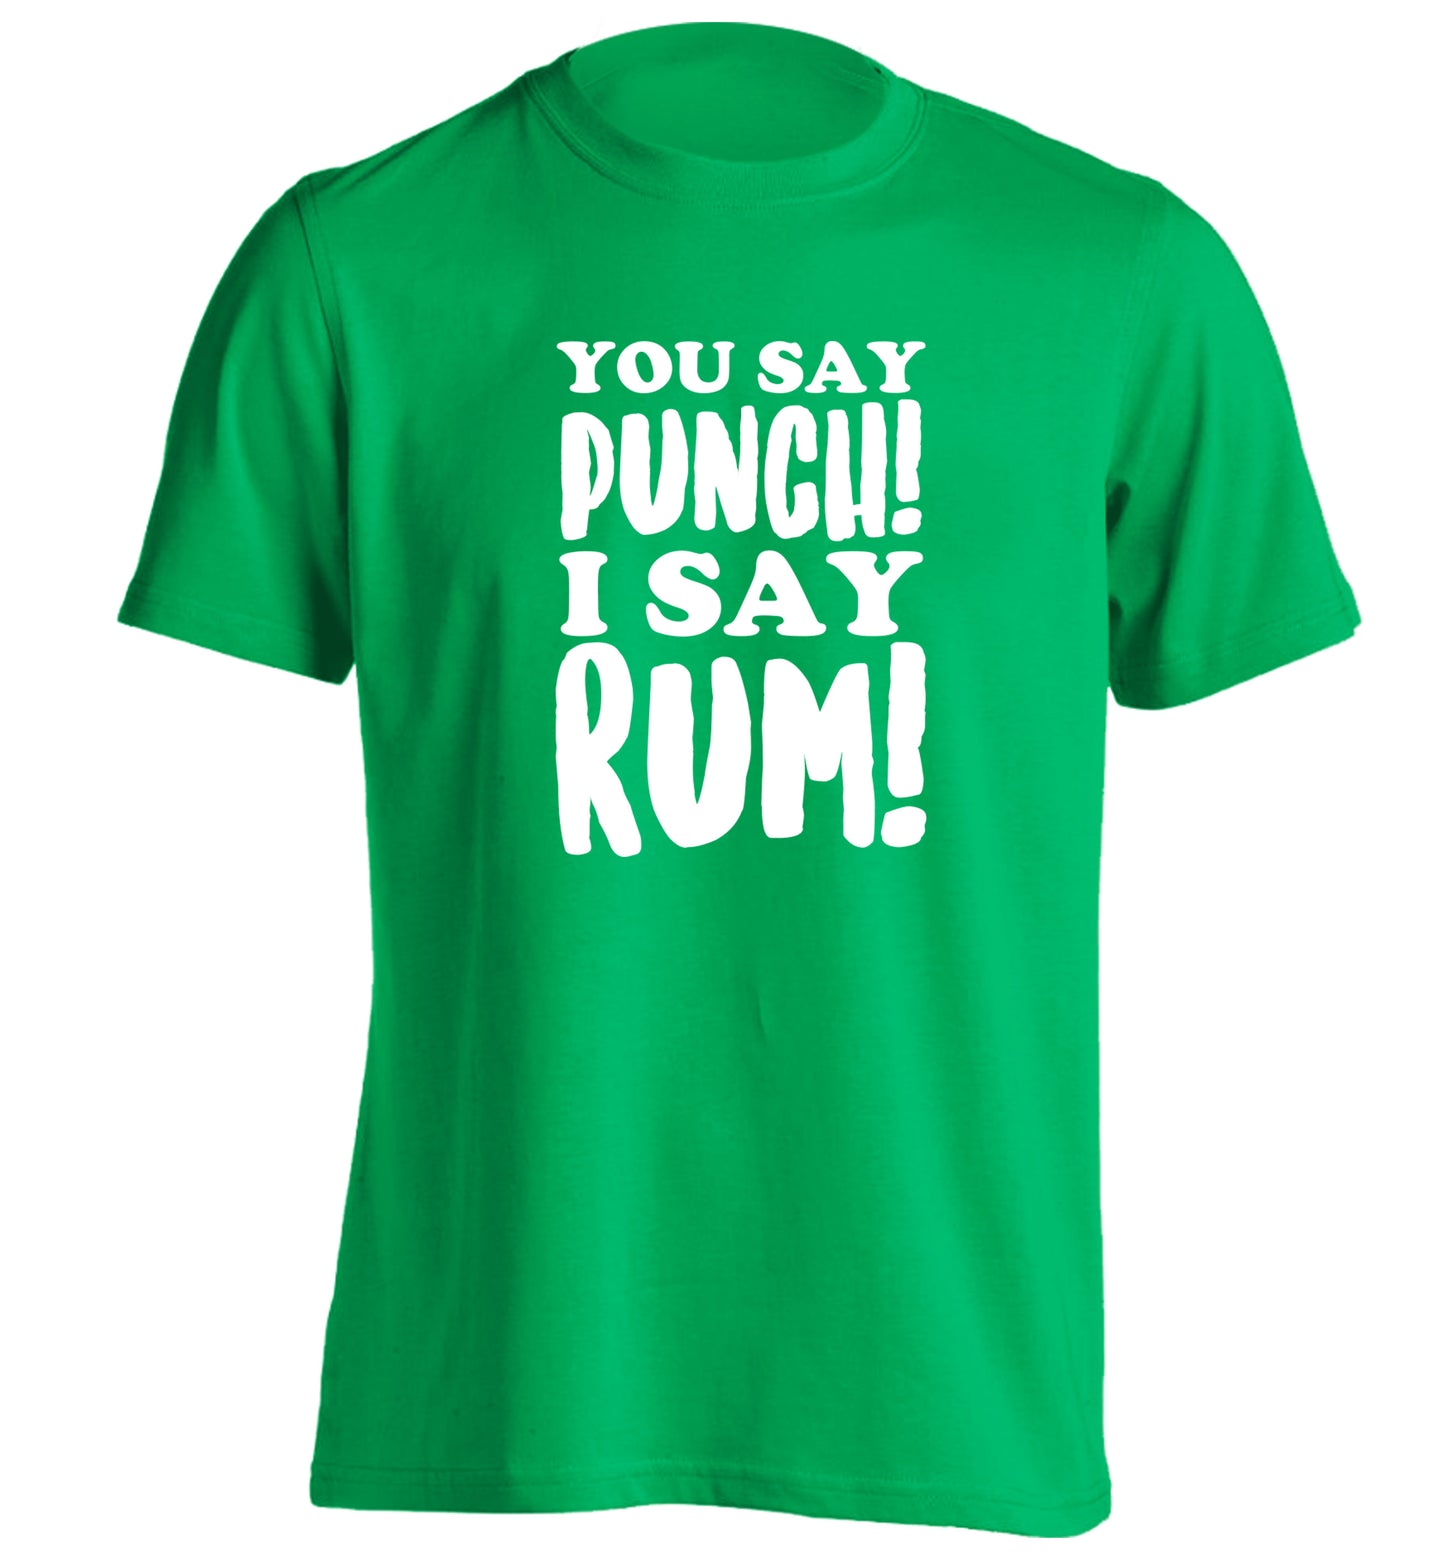 You say punch I say rum! adults unisex green Tshirt 2XL